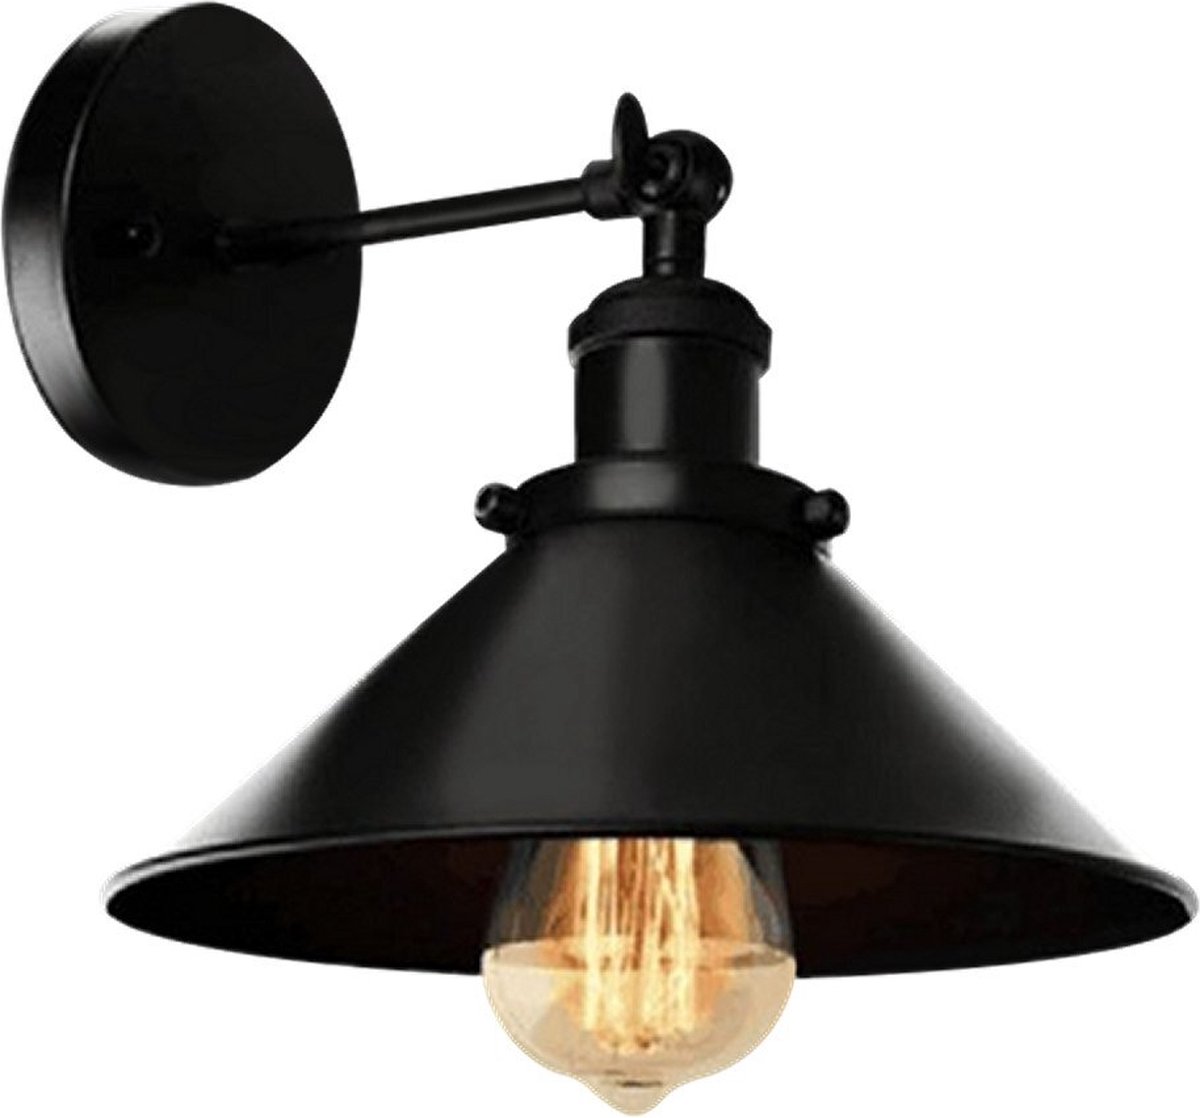 Zwarte wandlamp - kamerlamp - Ø22 cm - Zwart - Metaal - Industrieel - E27 - 240V - zonder lichtbron